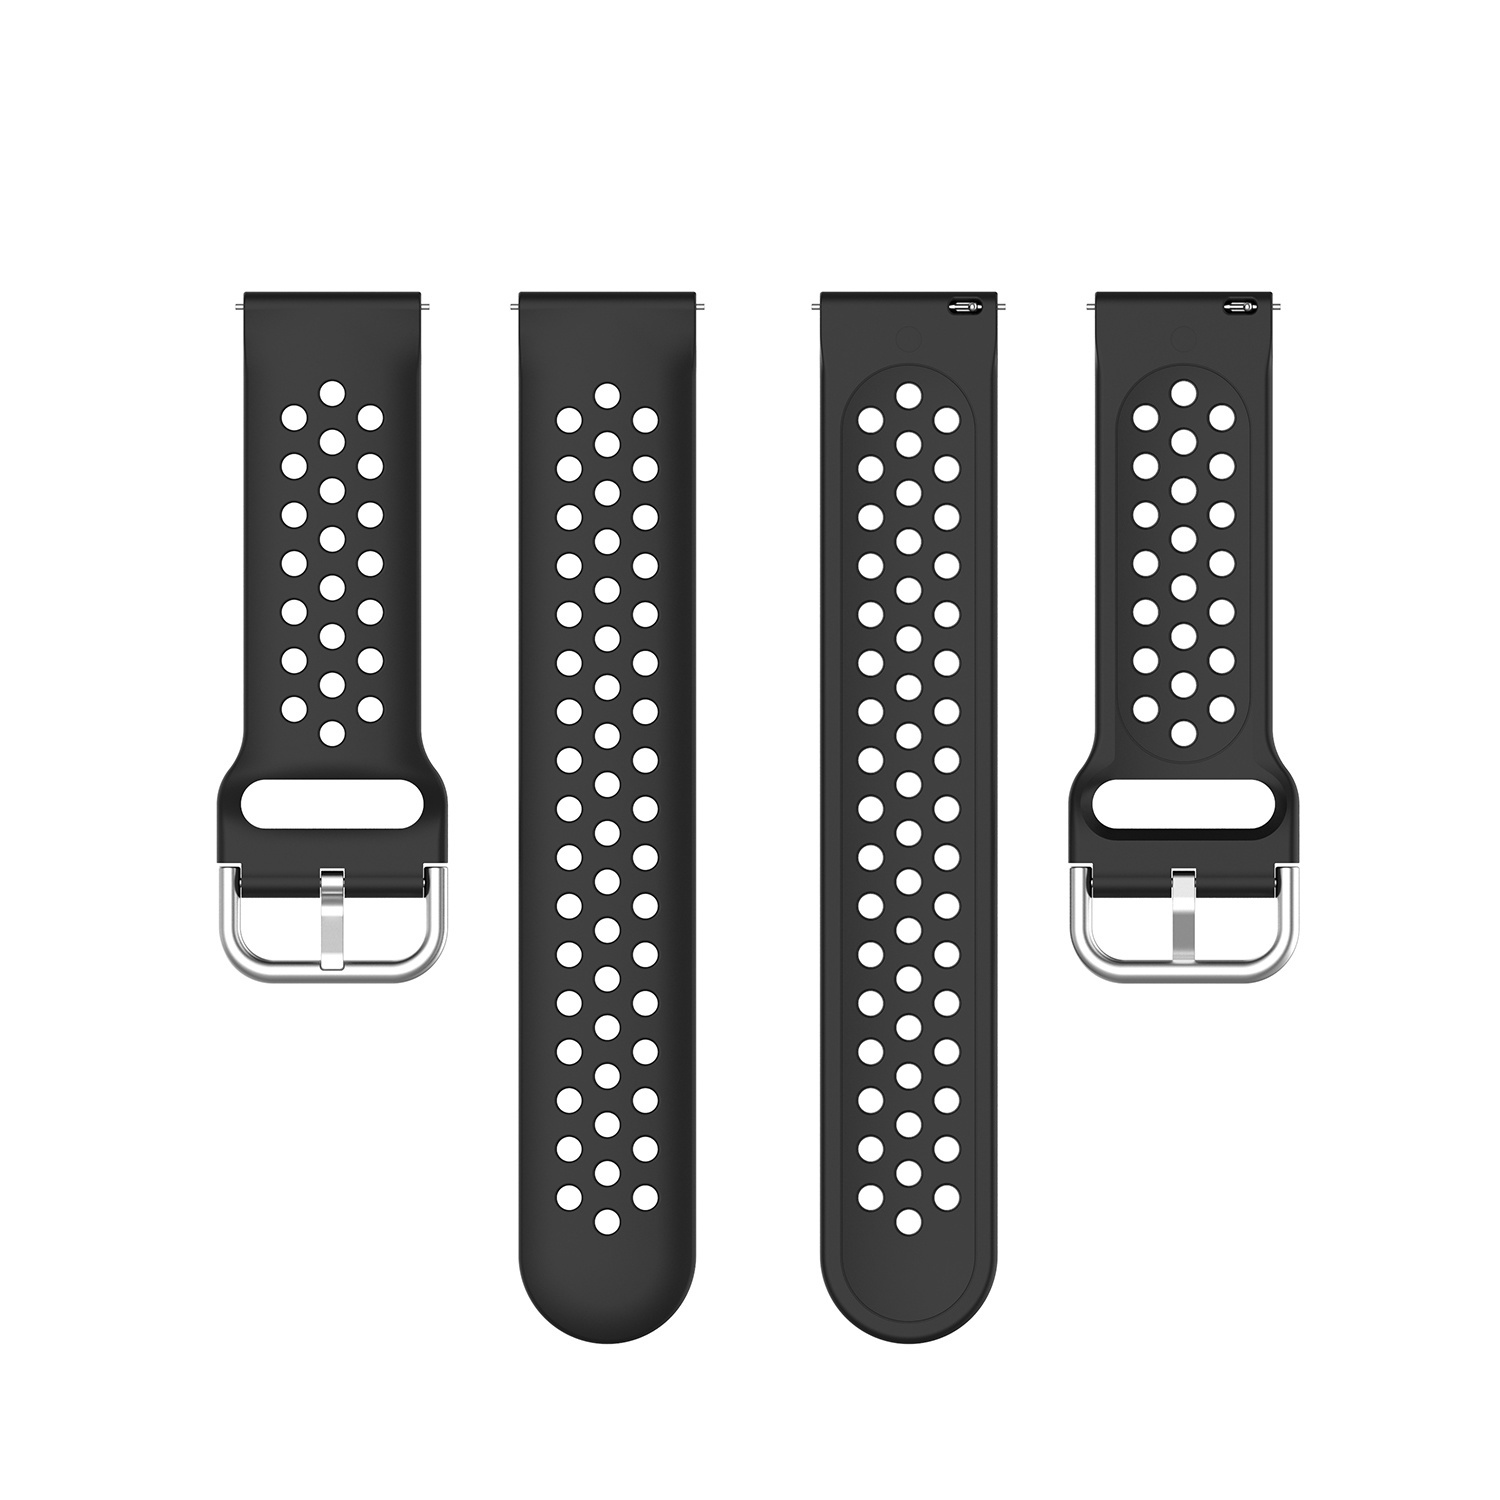 Cinturino doppia fibbia per Samsung Galaxy Watch - nero